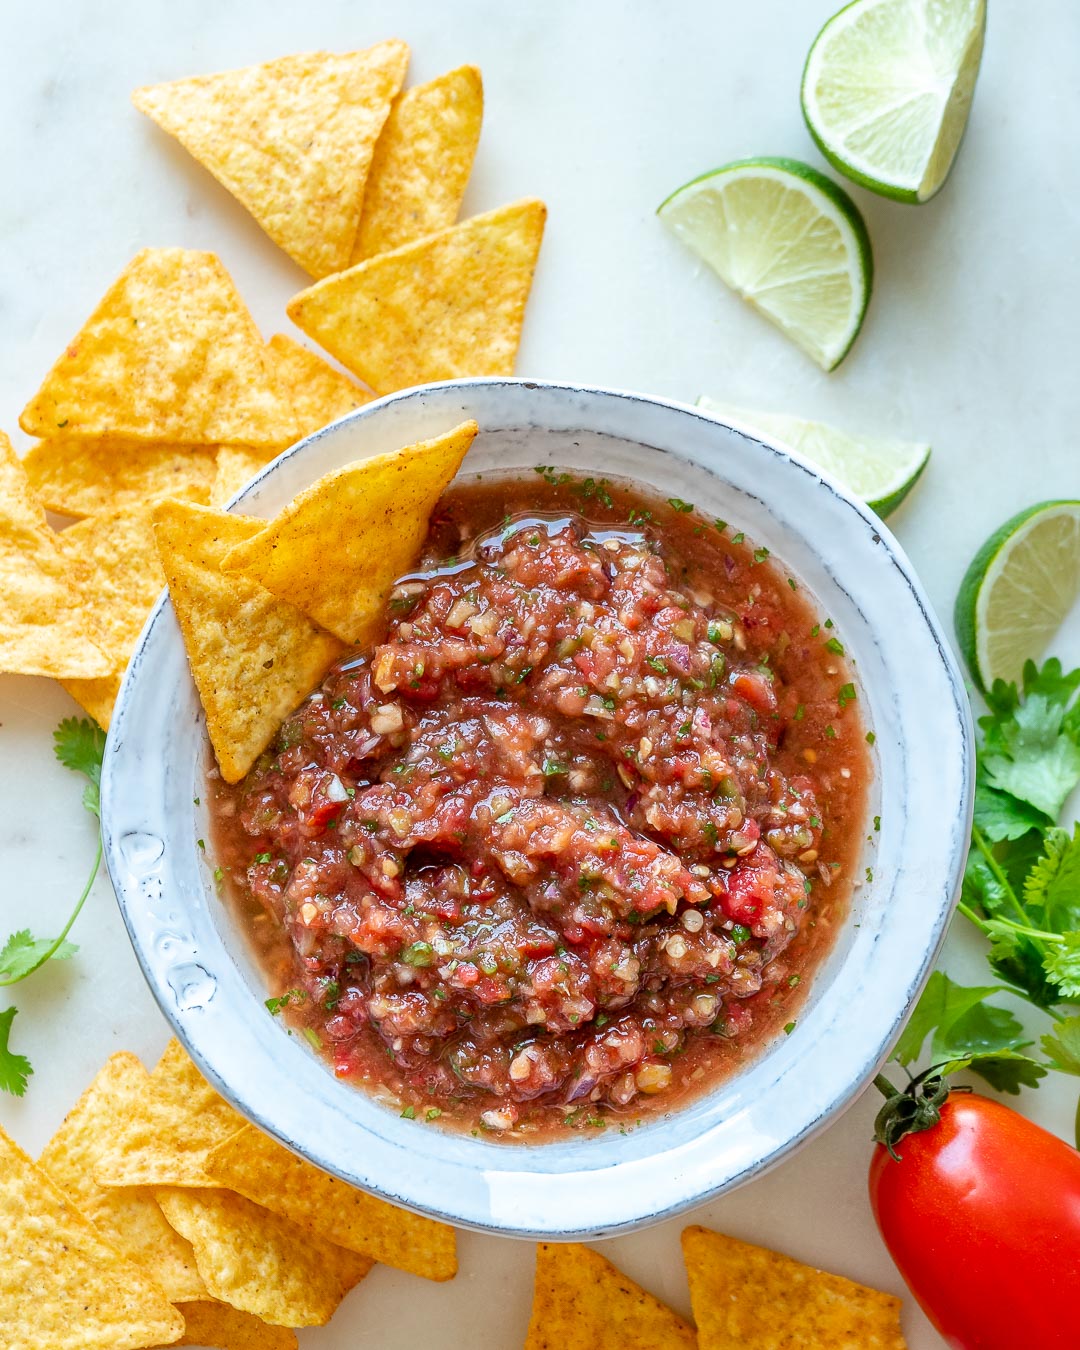 https://cleanfoodcrush.com/wp-content/uploads/2020/08/Quick-Easy-Homemade-Salsa-Clean-Food-Crush-Healthy-Recipe.jpg